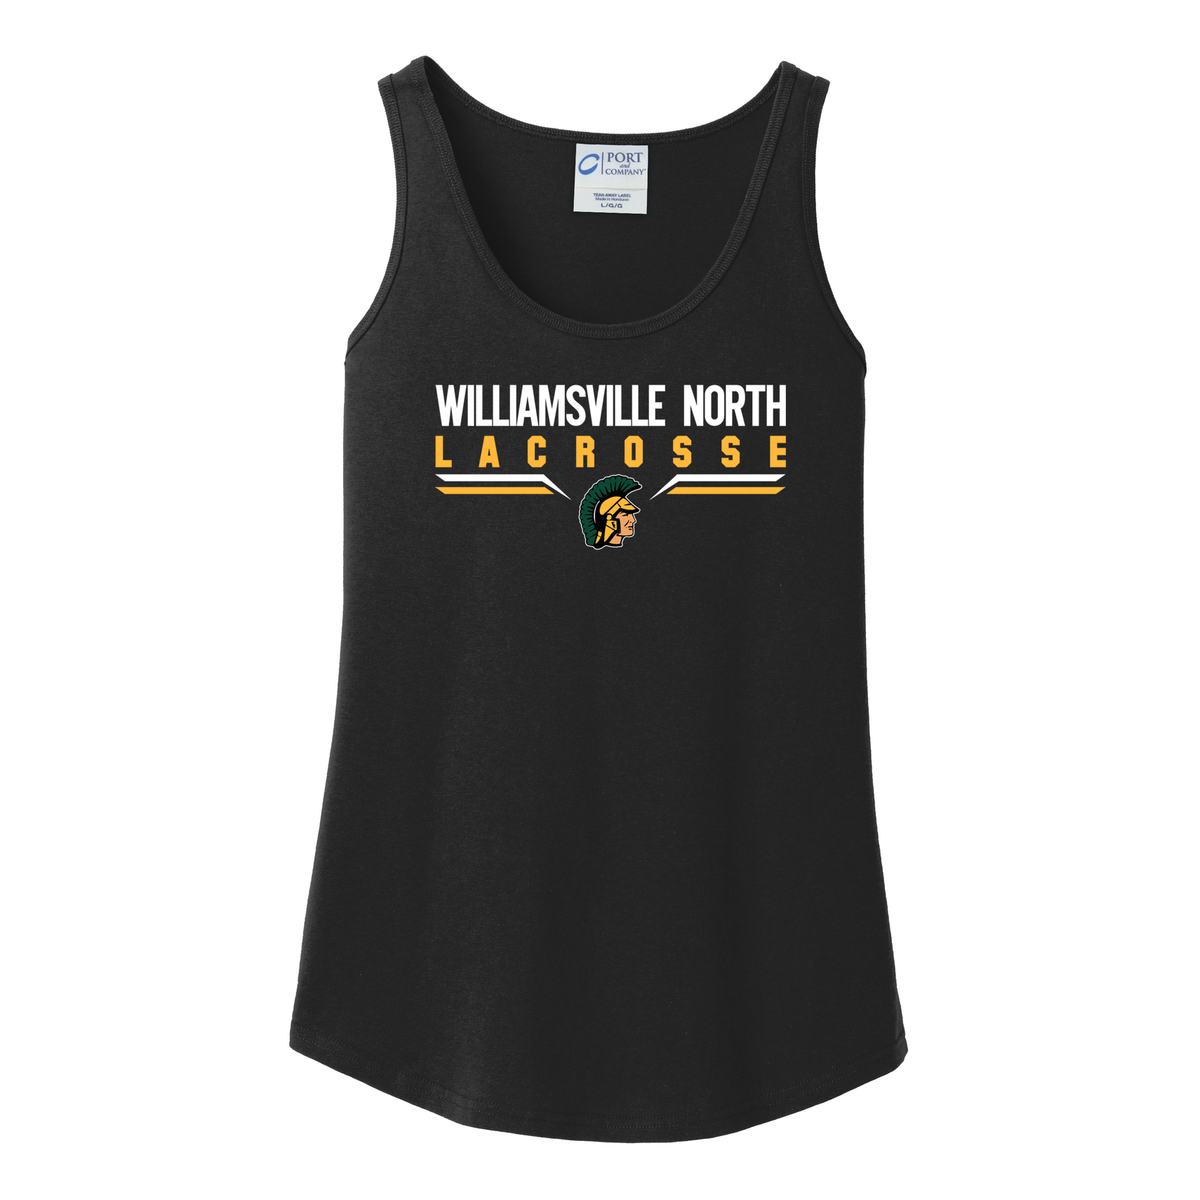 Williamsville North Lacrosse Women's Tank Top